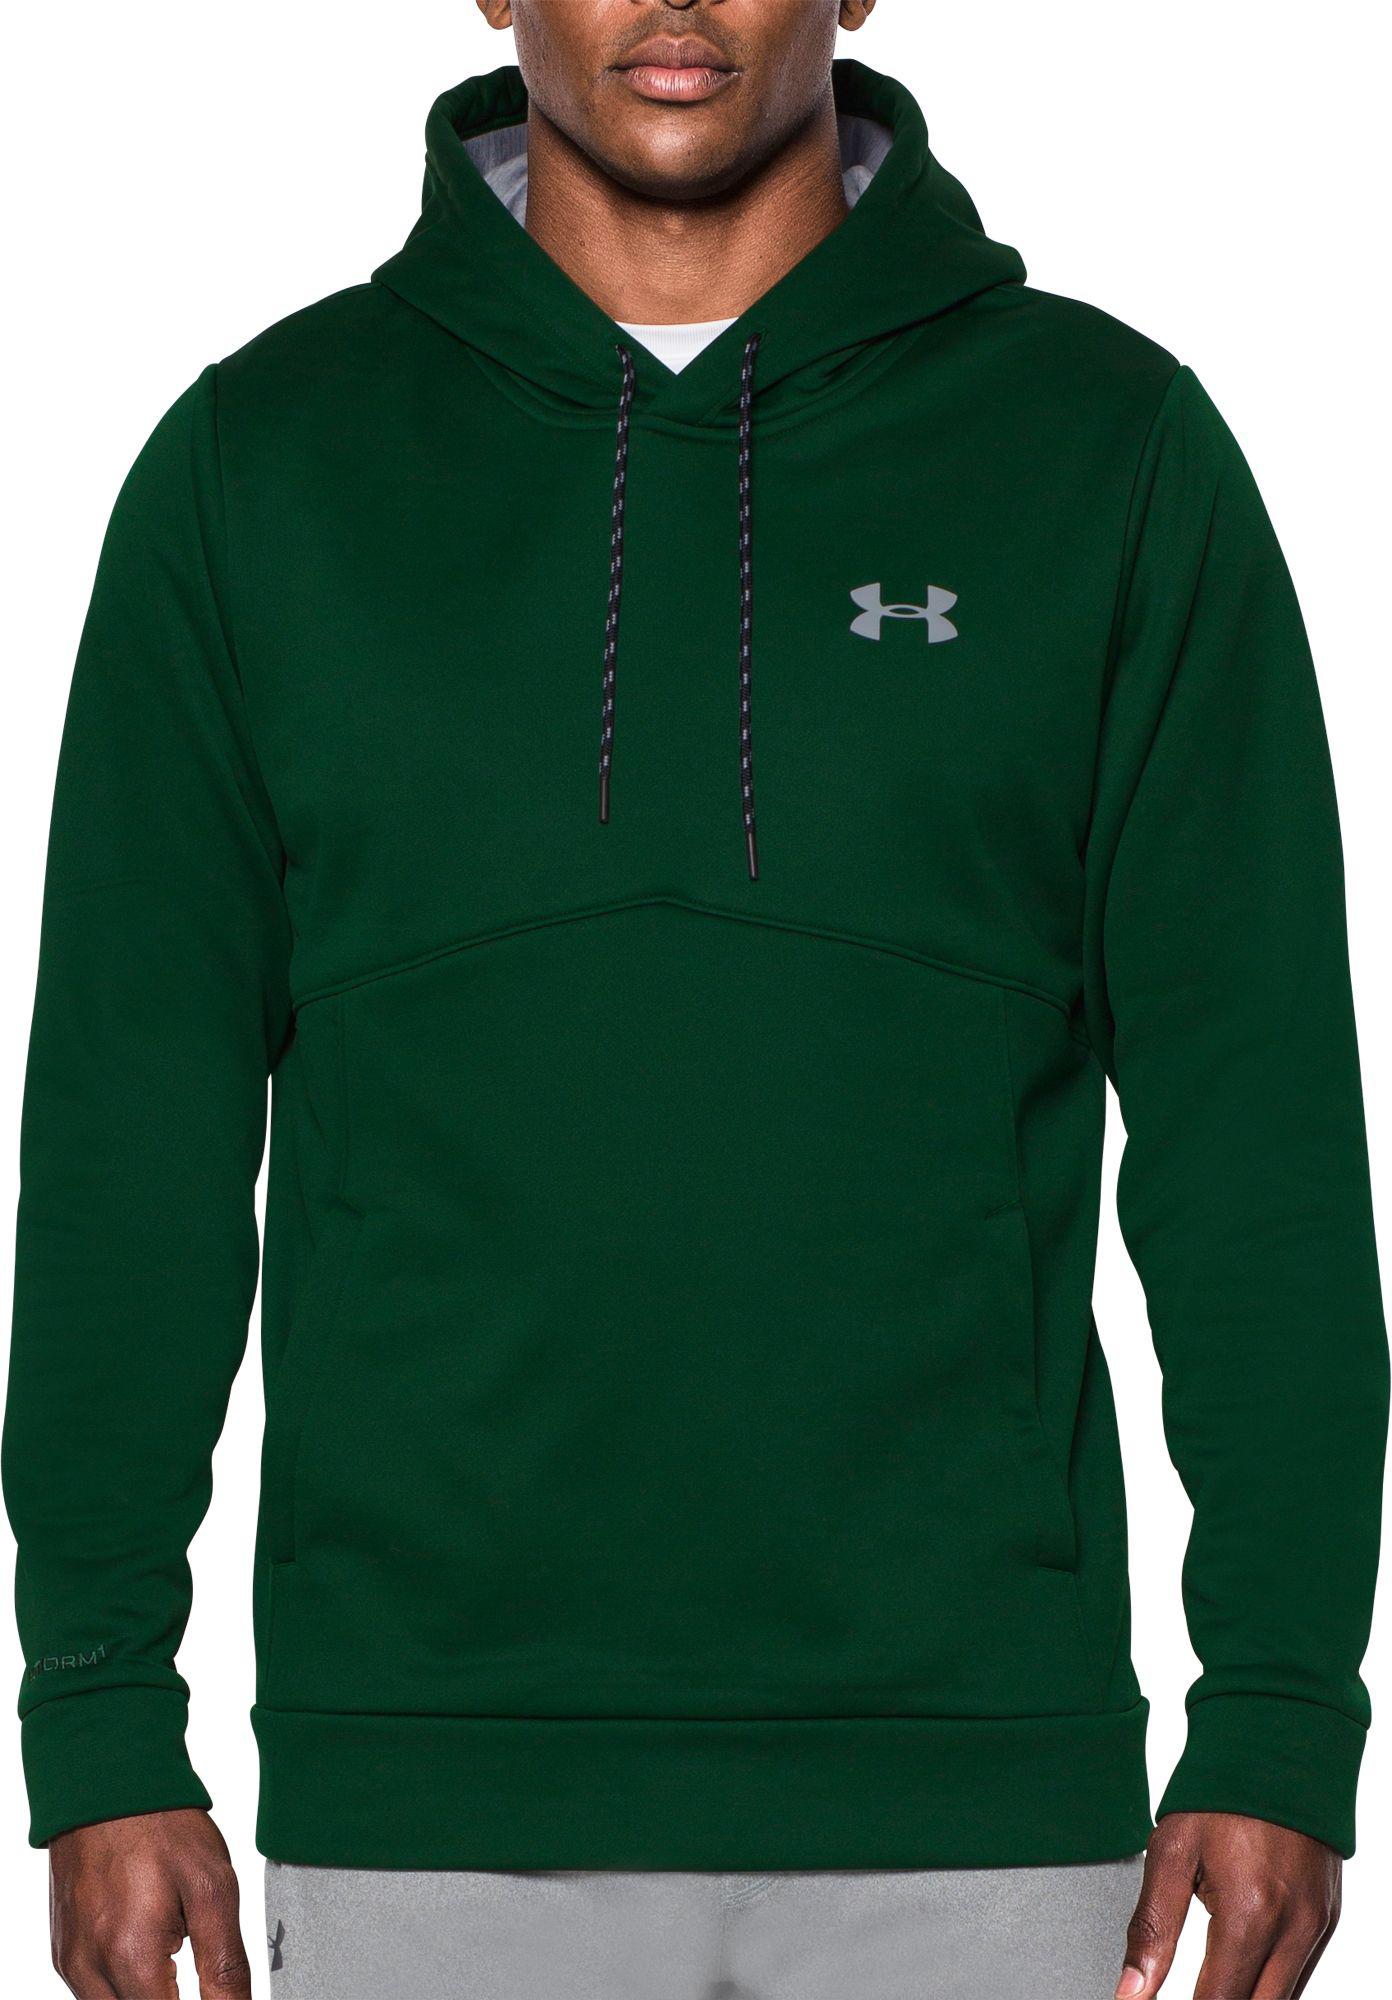 green under armour hoodie